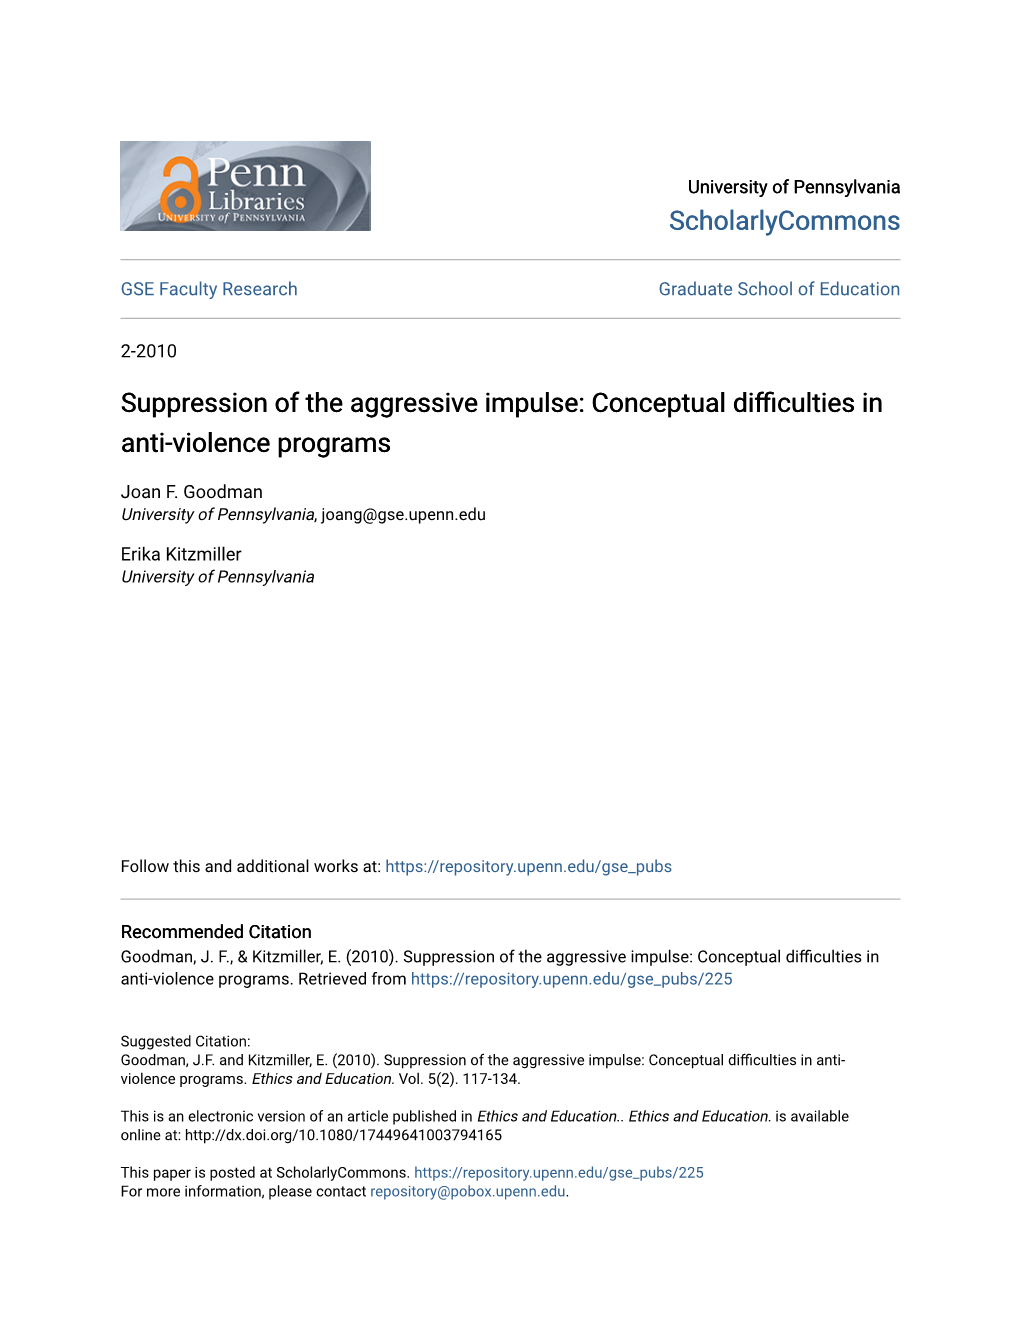 Suppression of the Aggressive Impulse: Conceptual Difficulties in Anti-Violence Programs